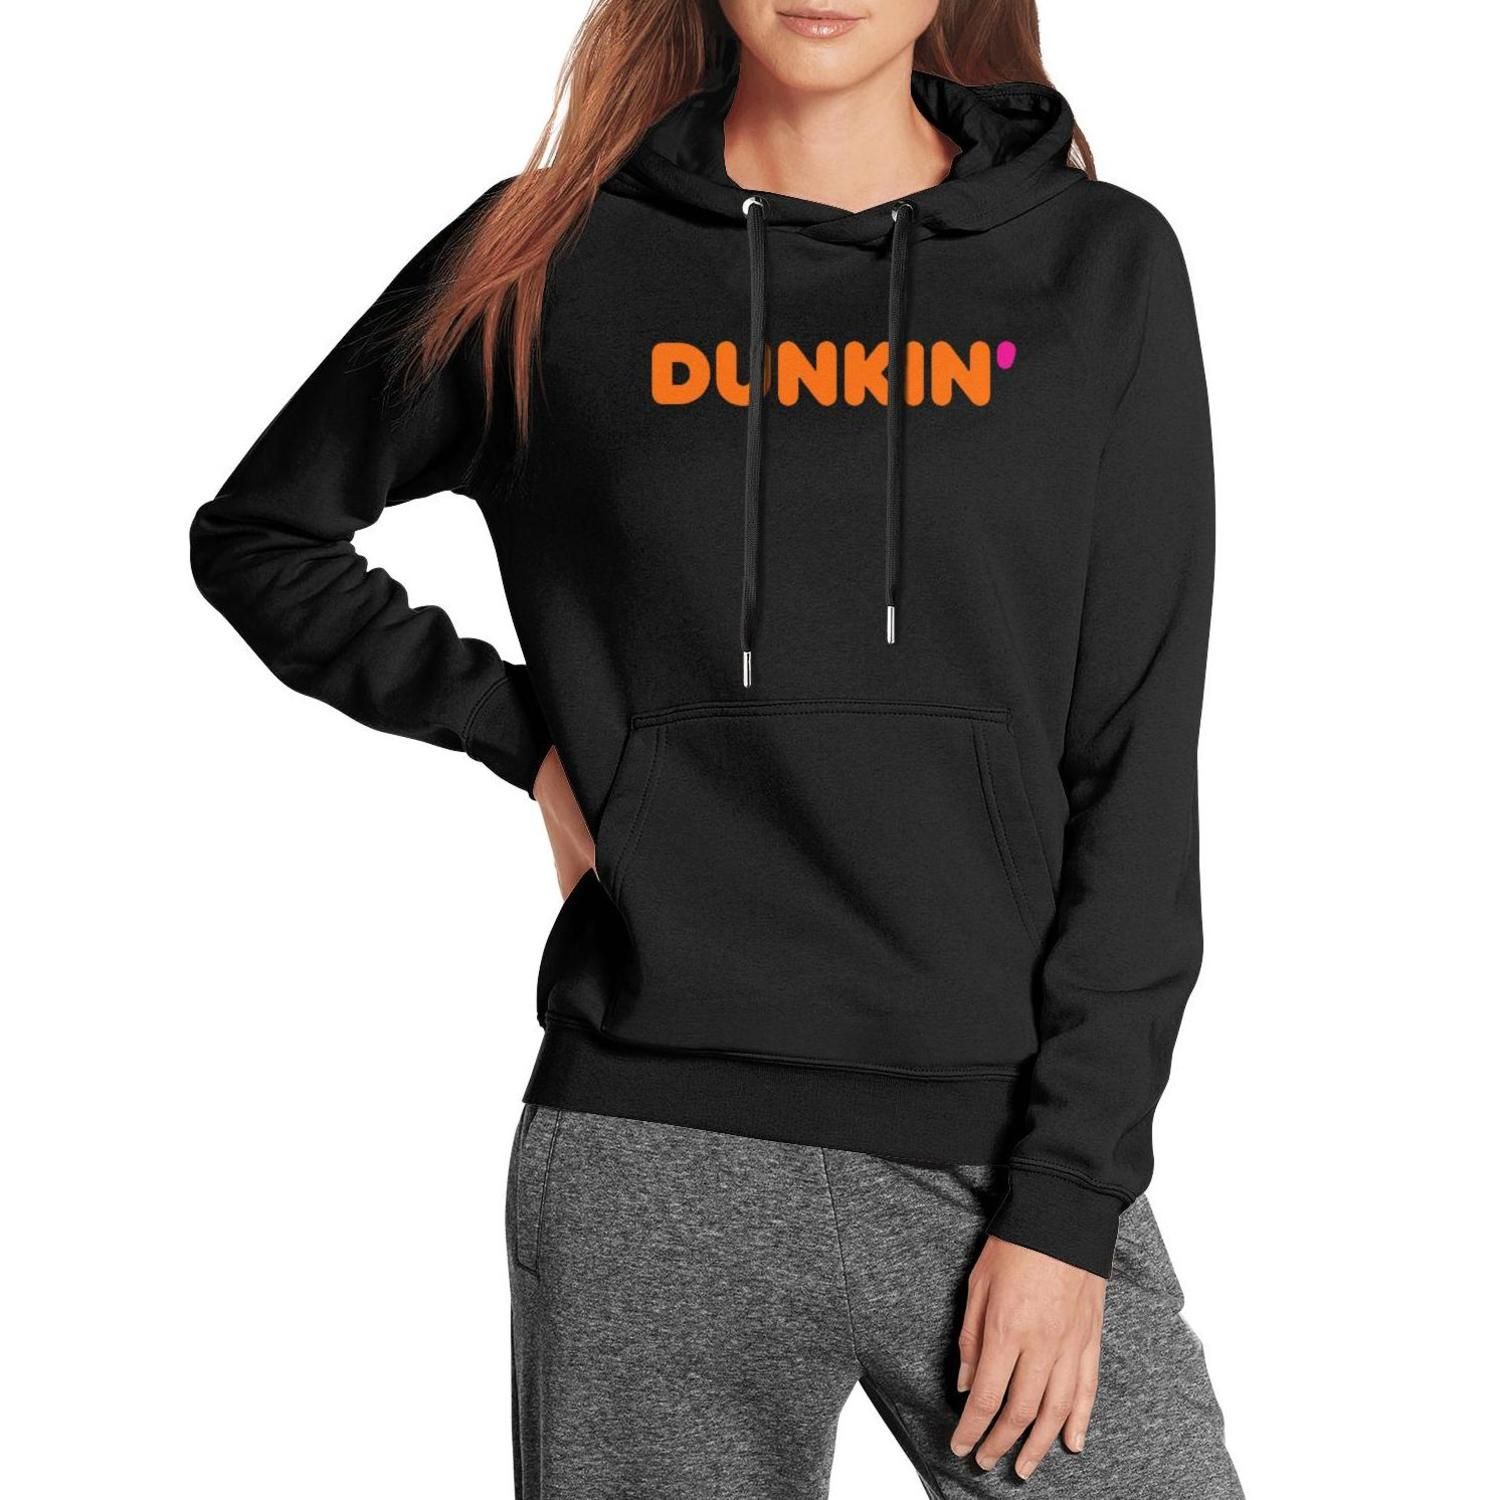 Mens Autumn Winter Long Sleeve Hoodies Dunkin Donuts Hooded Pockets Sweatshirt Tracksuits Black